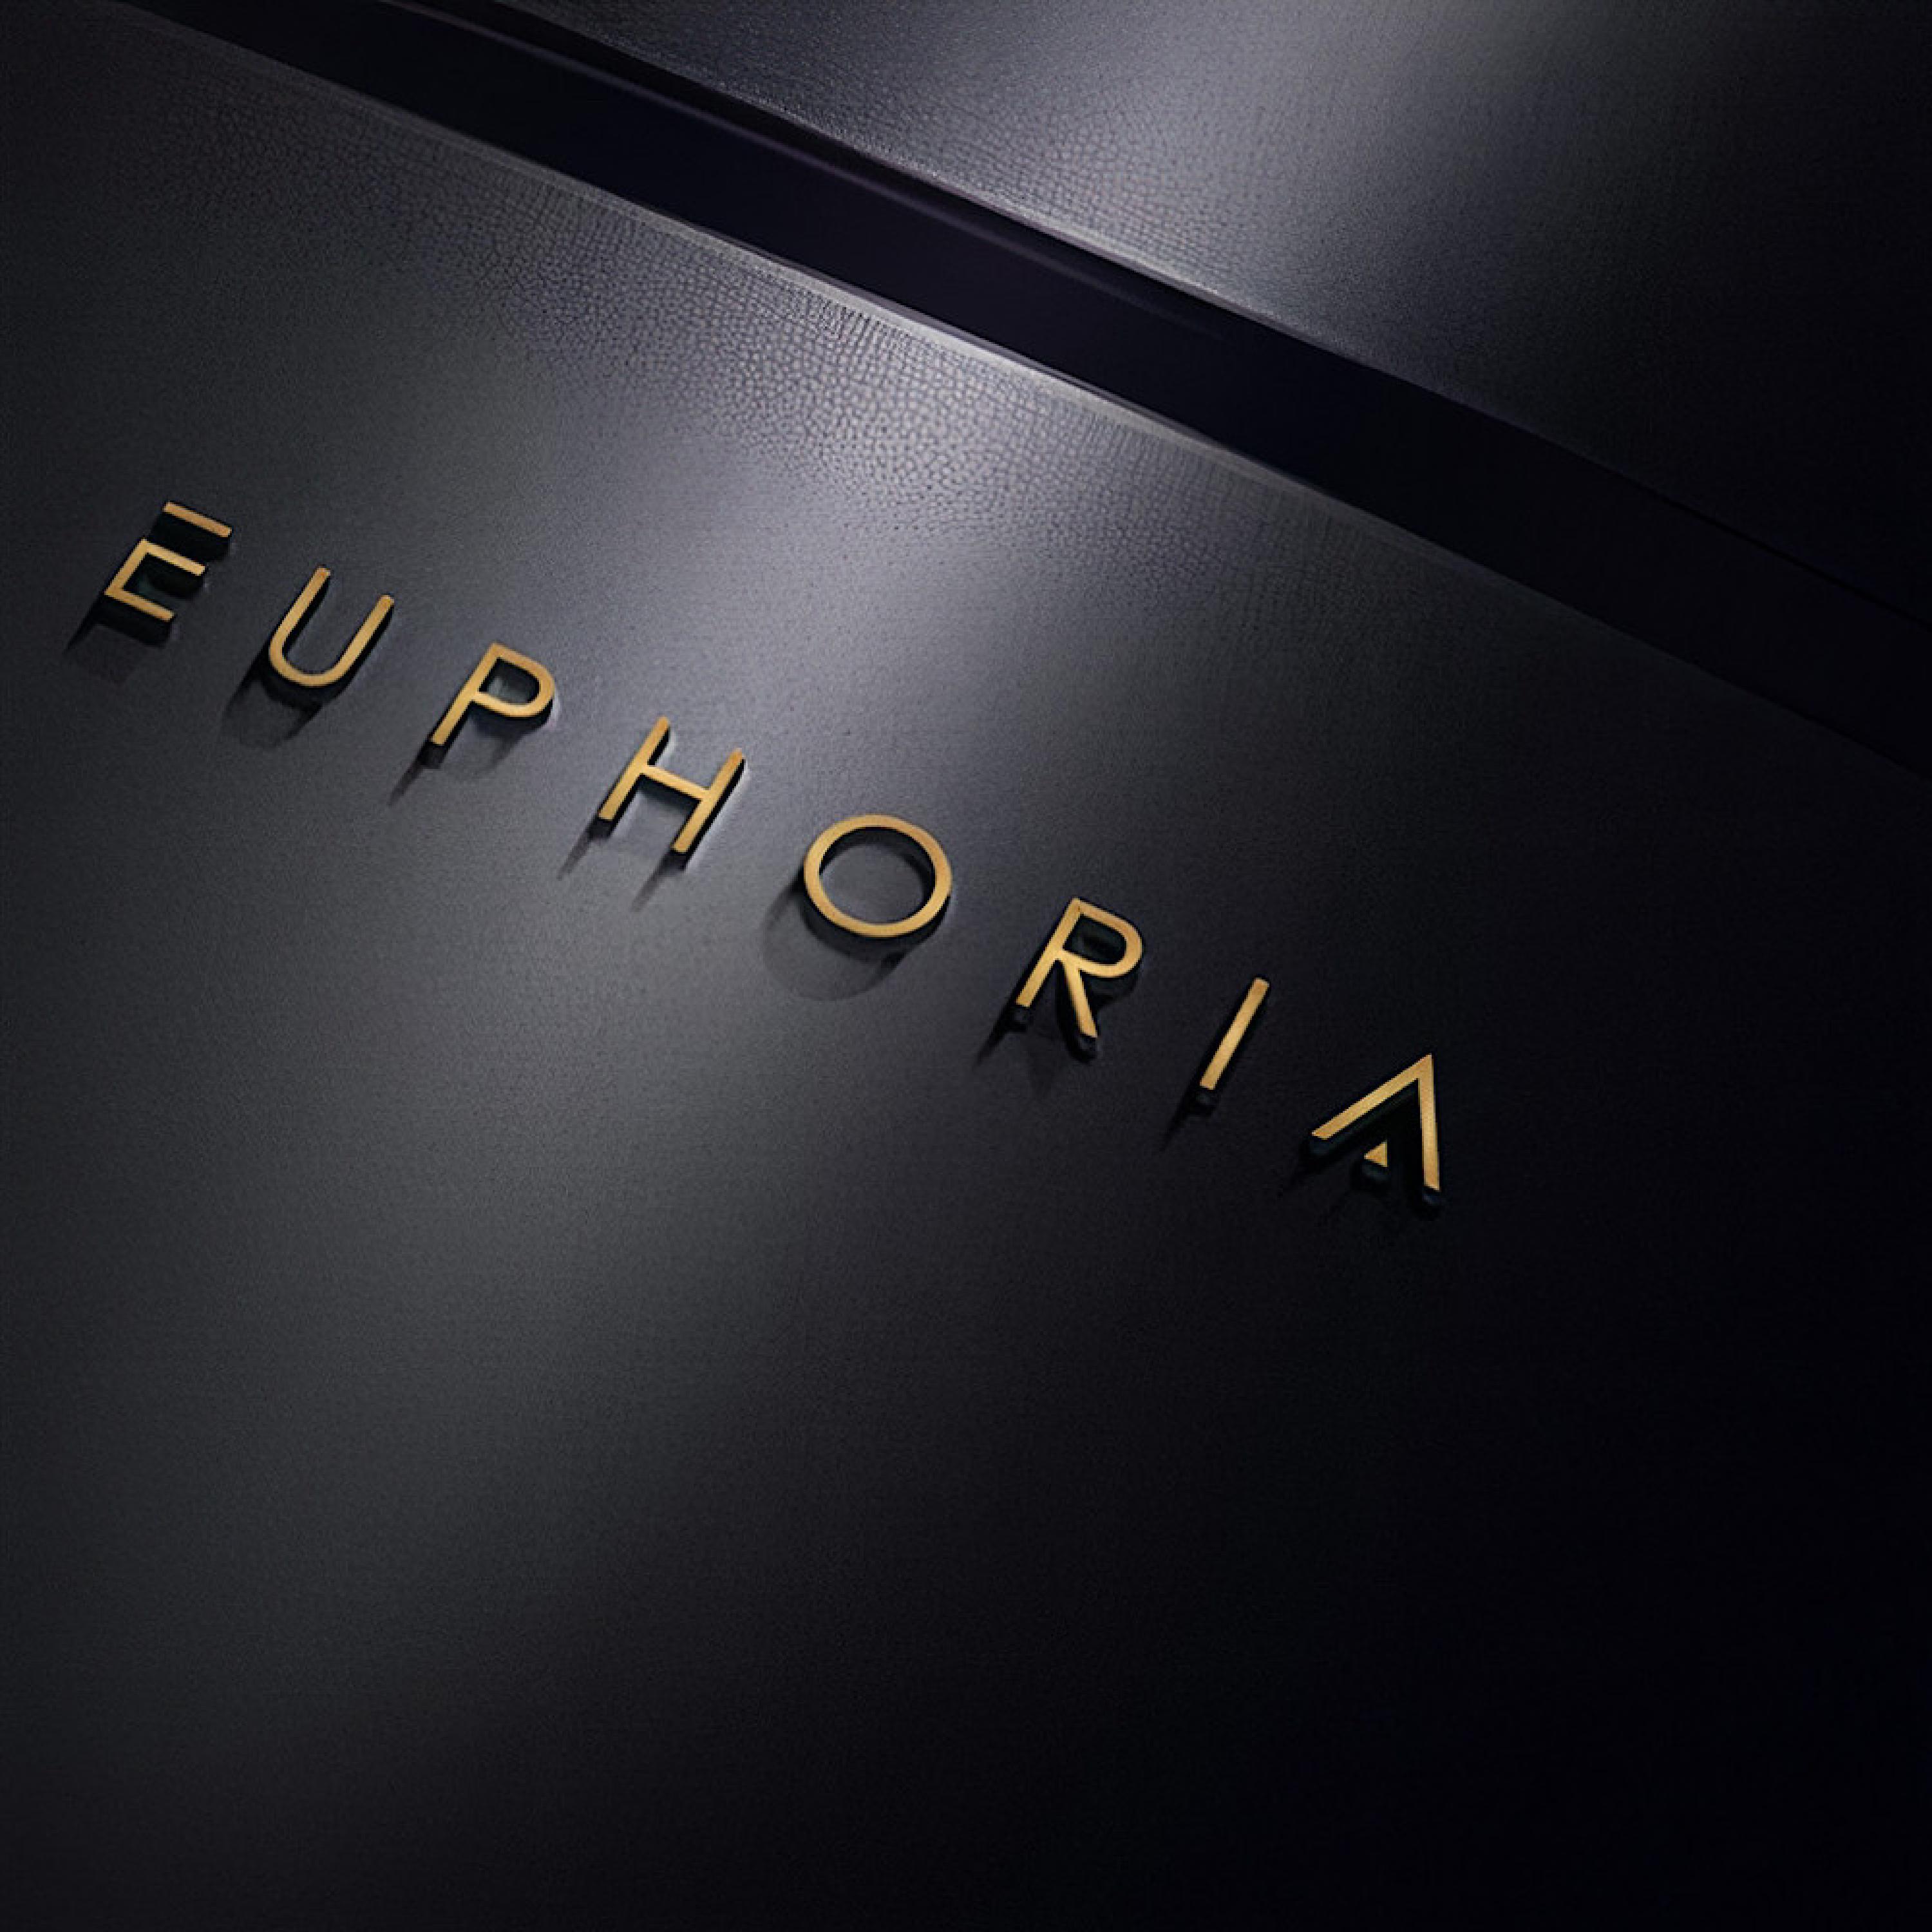 Chris Coburn - Euphoria